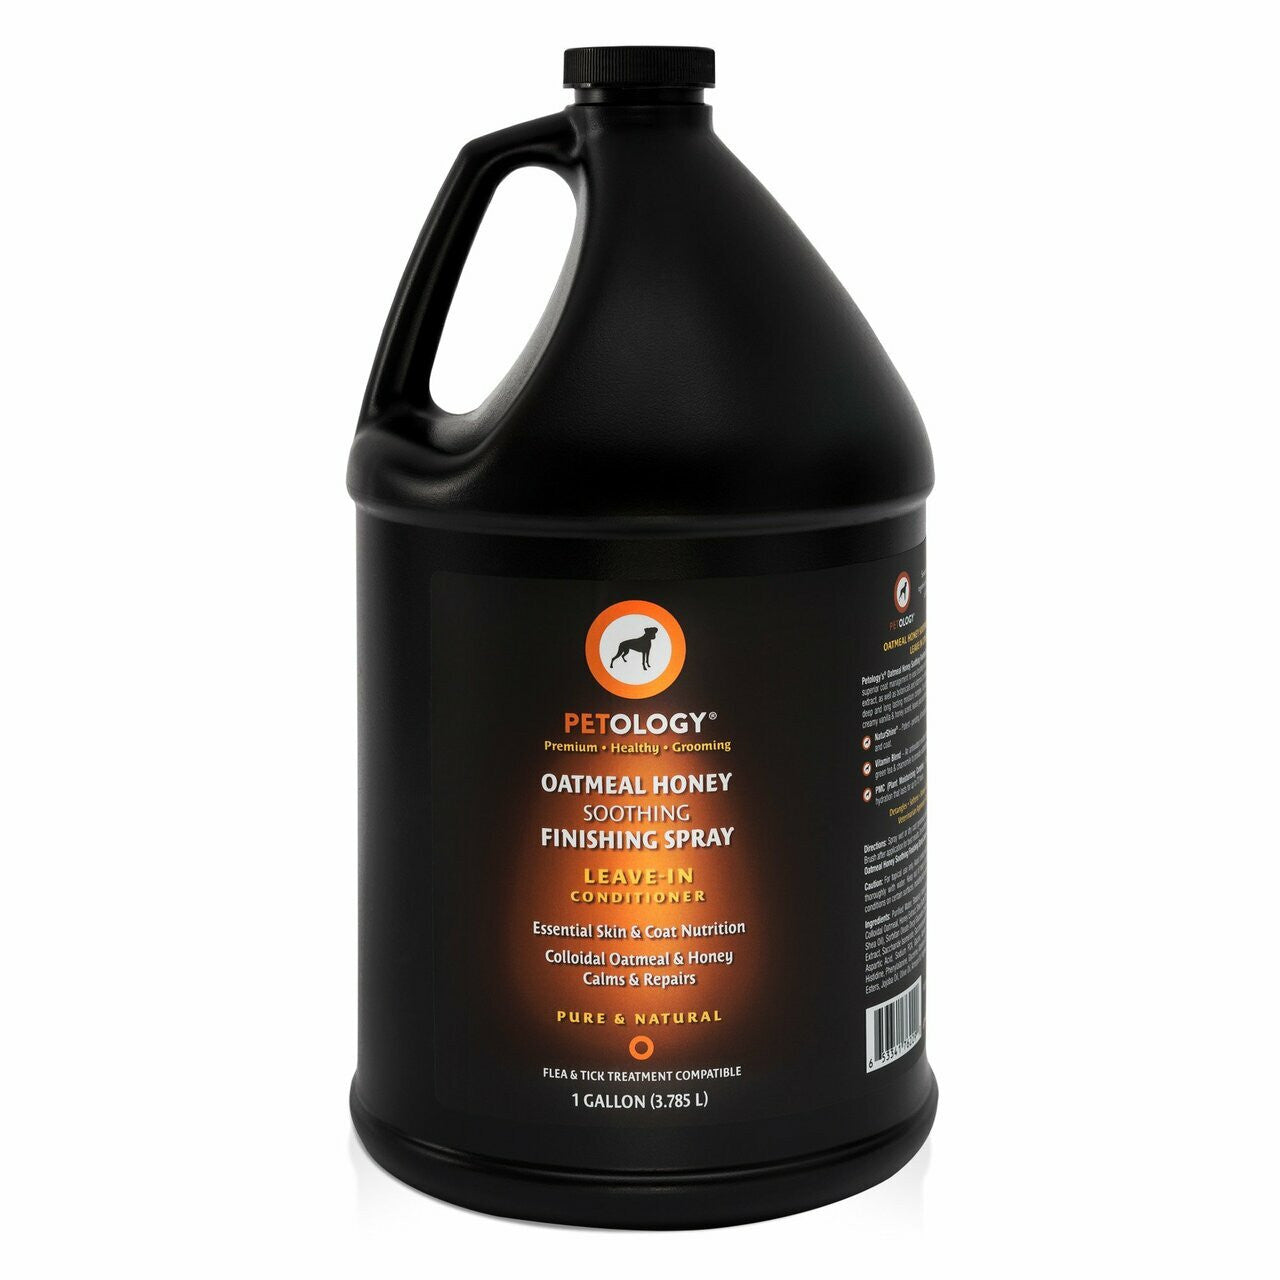 Petology Oatmeal Honey Soothing Daily Finishing Spray, 1 Gallon-Shampoo & Conditioner-Pet's Choice Supply